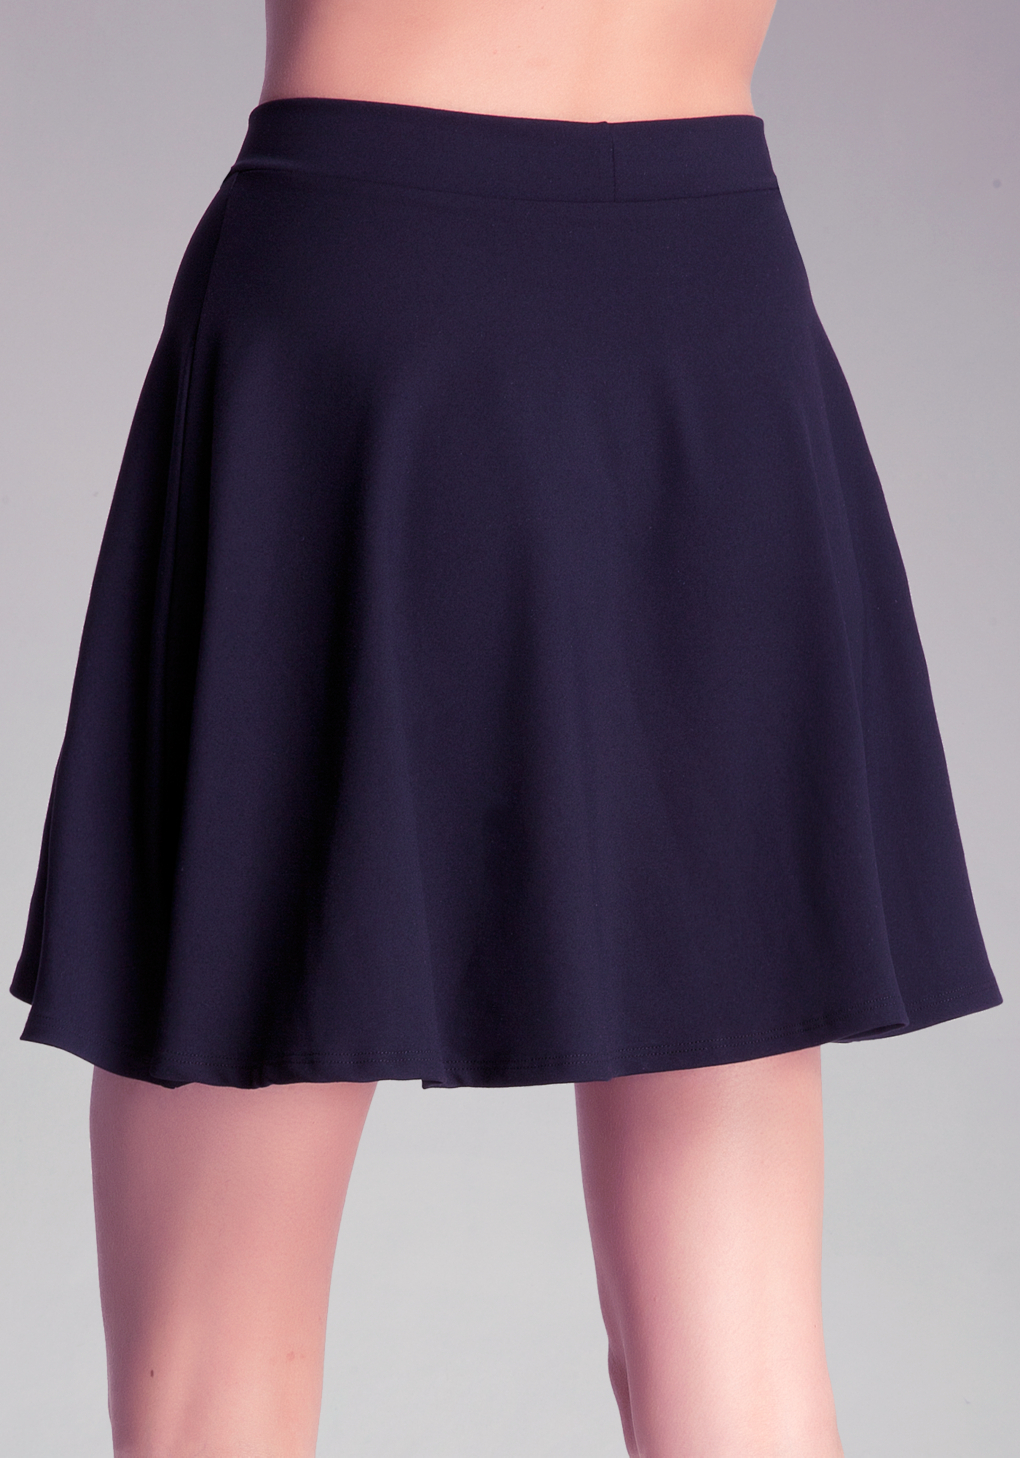 Bebe Mini Circle Skirt in Blue - Lyst